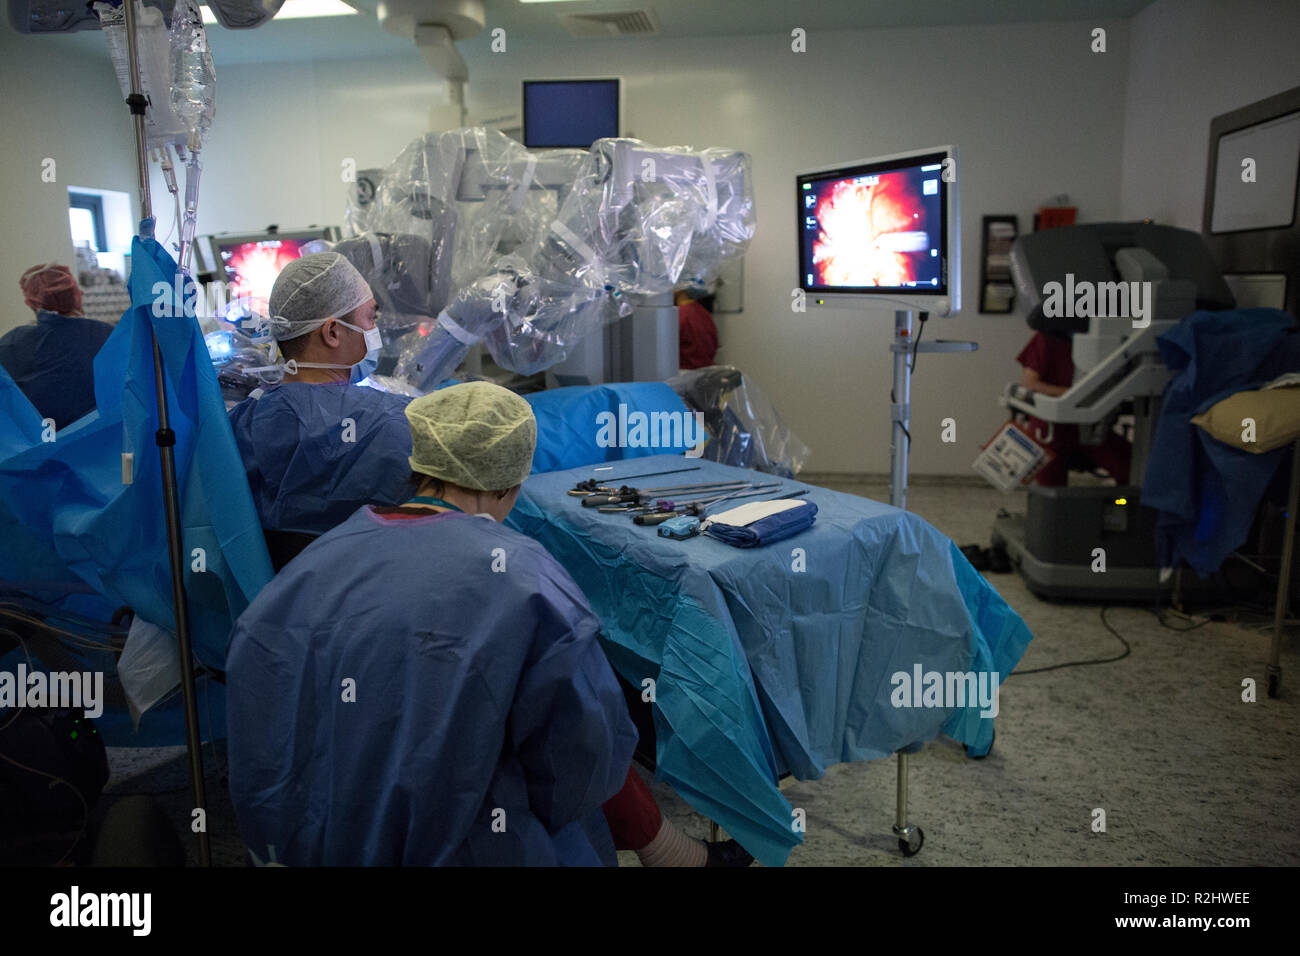 Robotic surgeon da Vinci Xi robot operating a surgical procedure of removing a bladder at University College London Hospital, London, England, UK Stock Photo